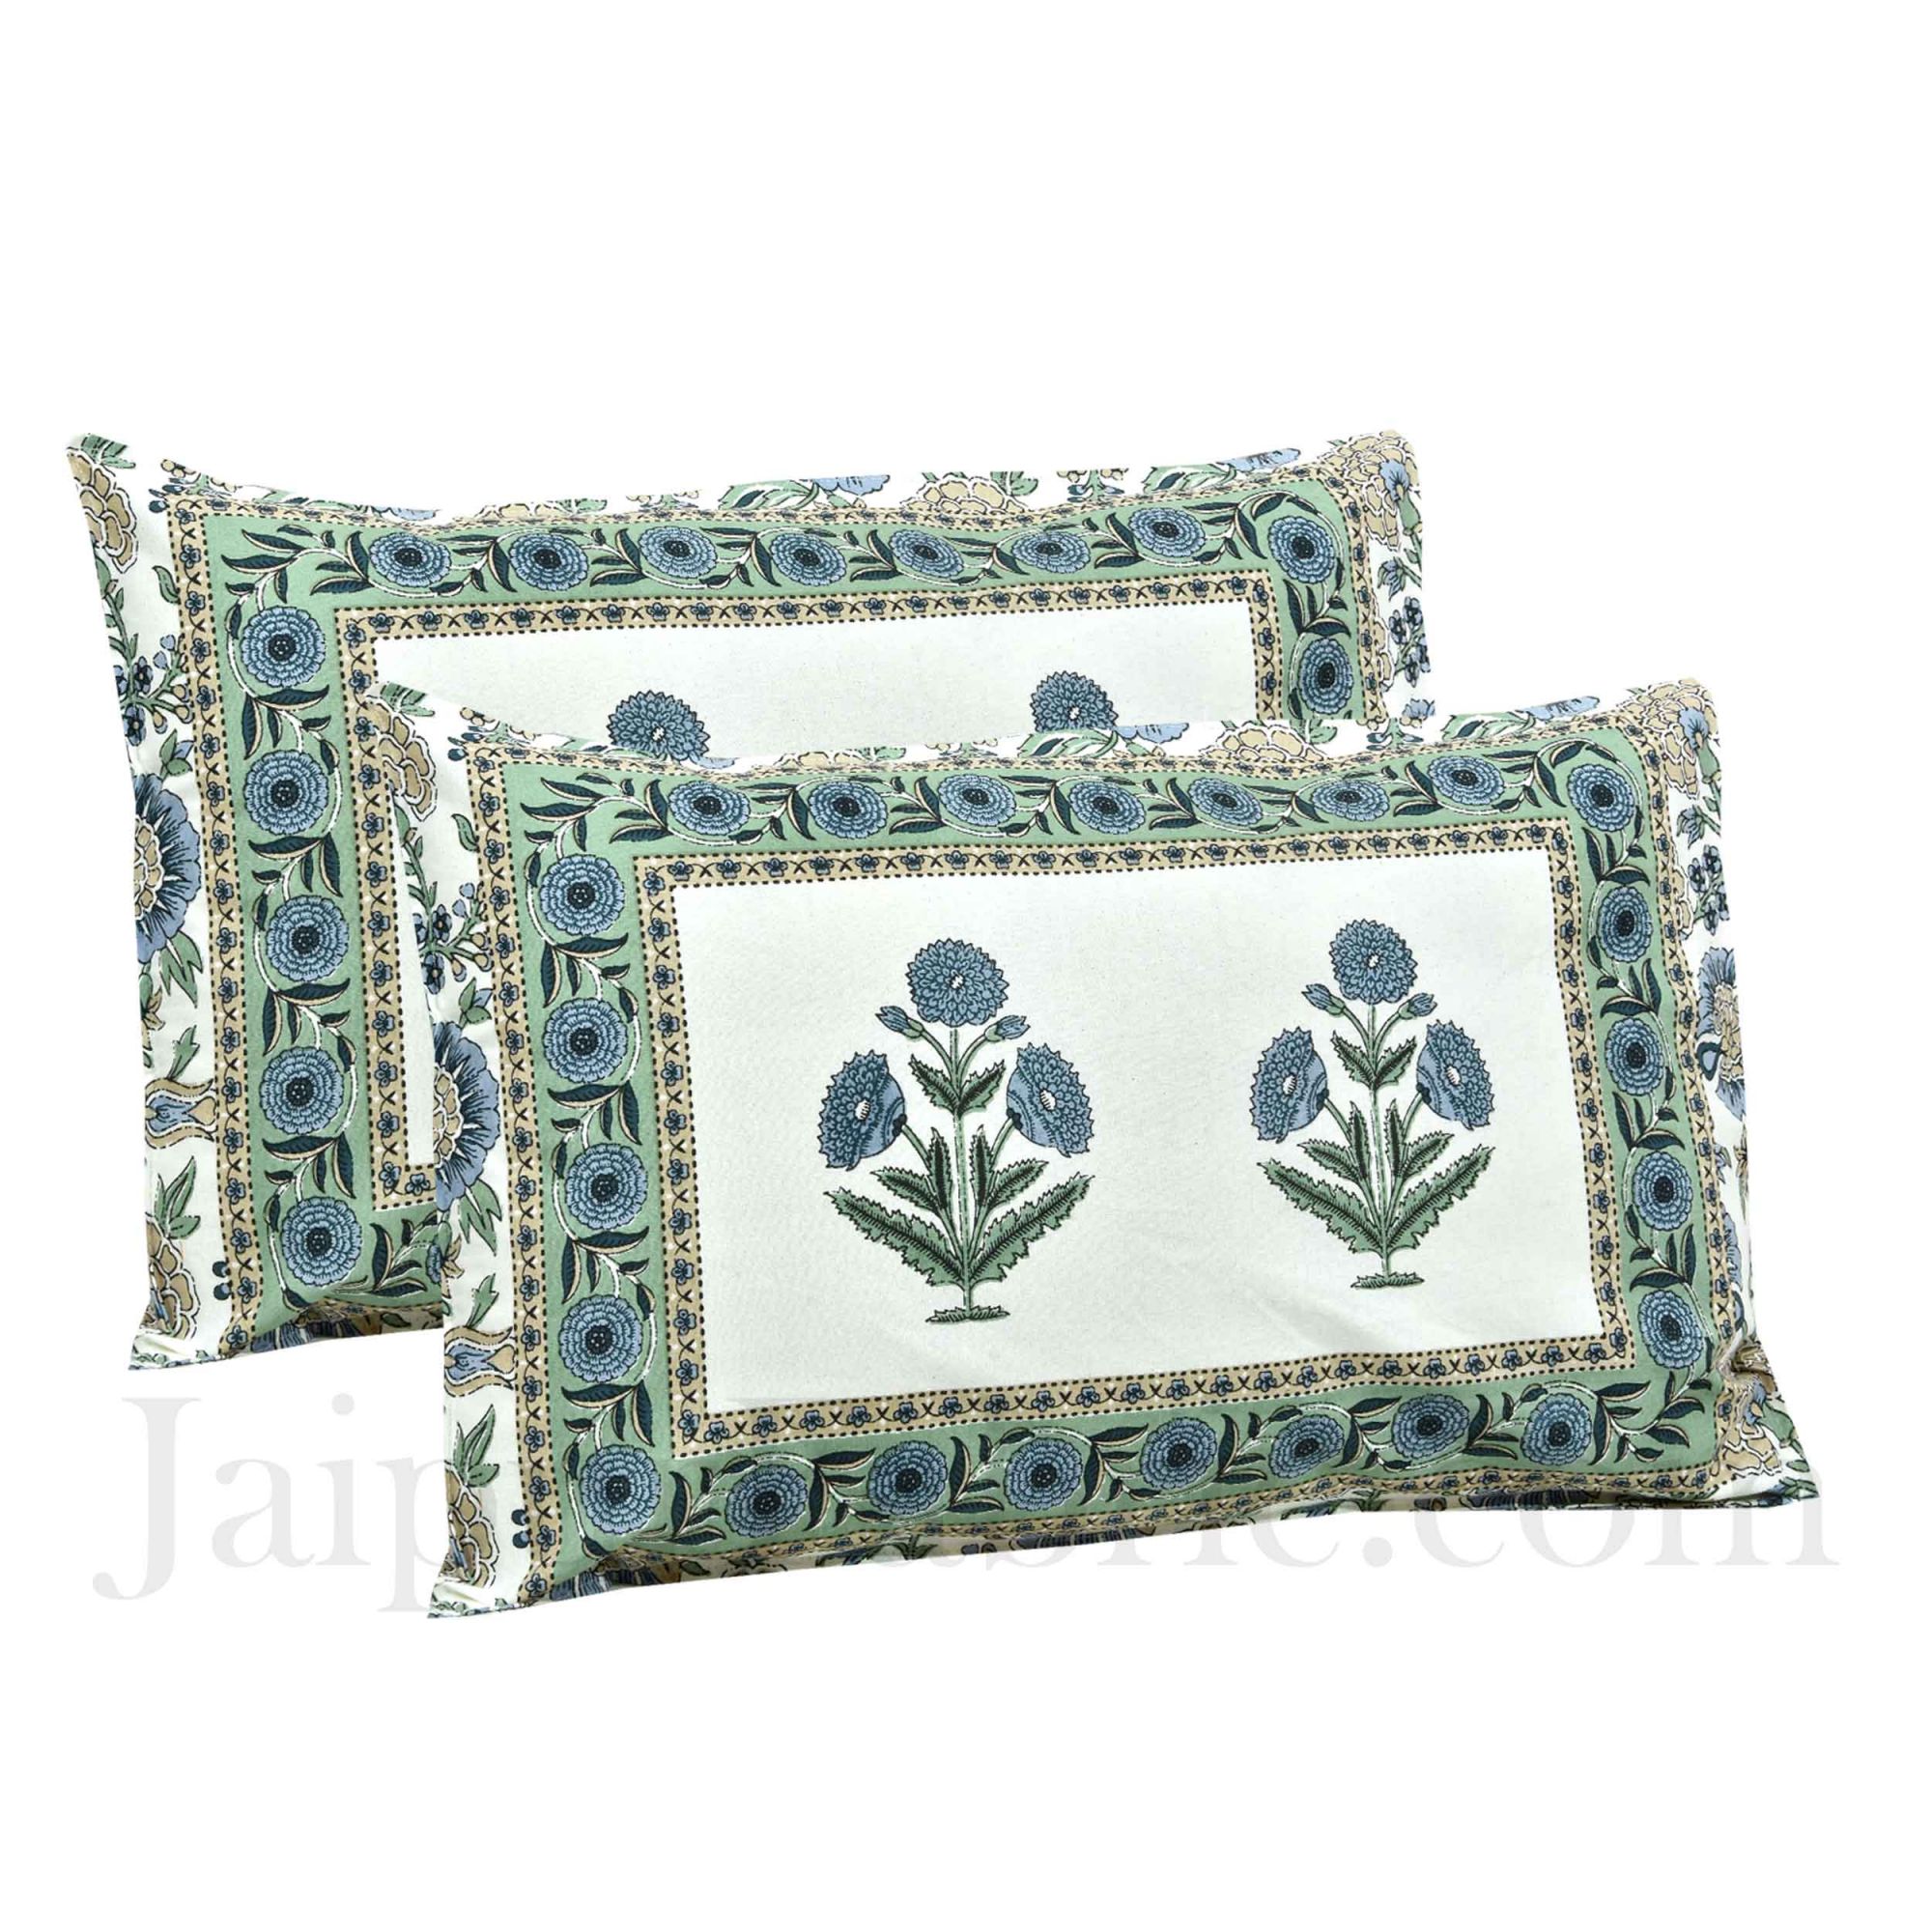 Pure Cotton Green Color Floral Ethnic Jaipuri Double Bedsheet